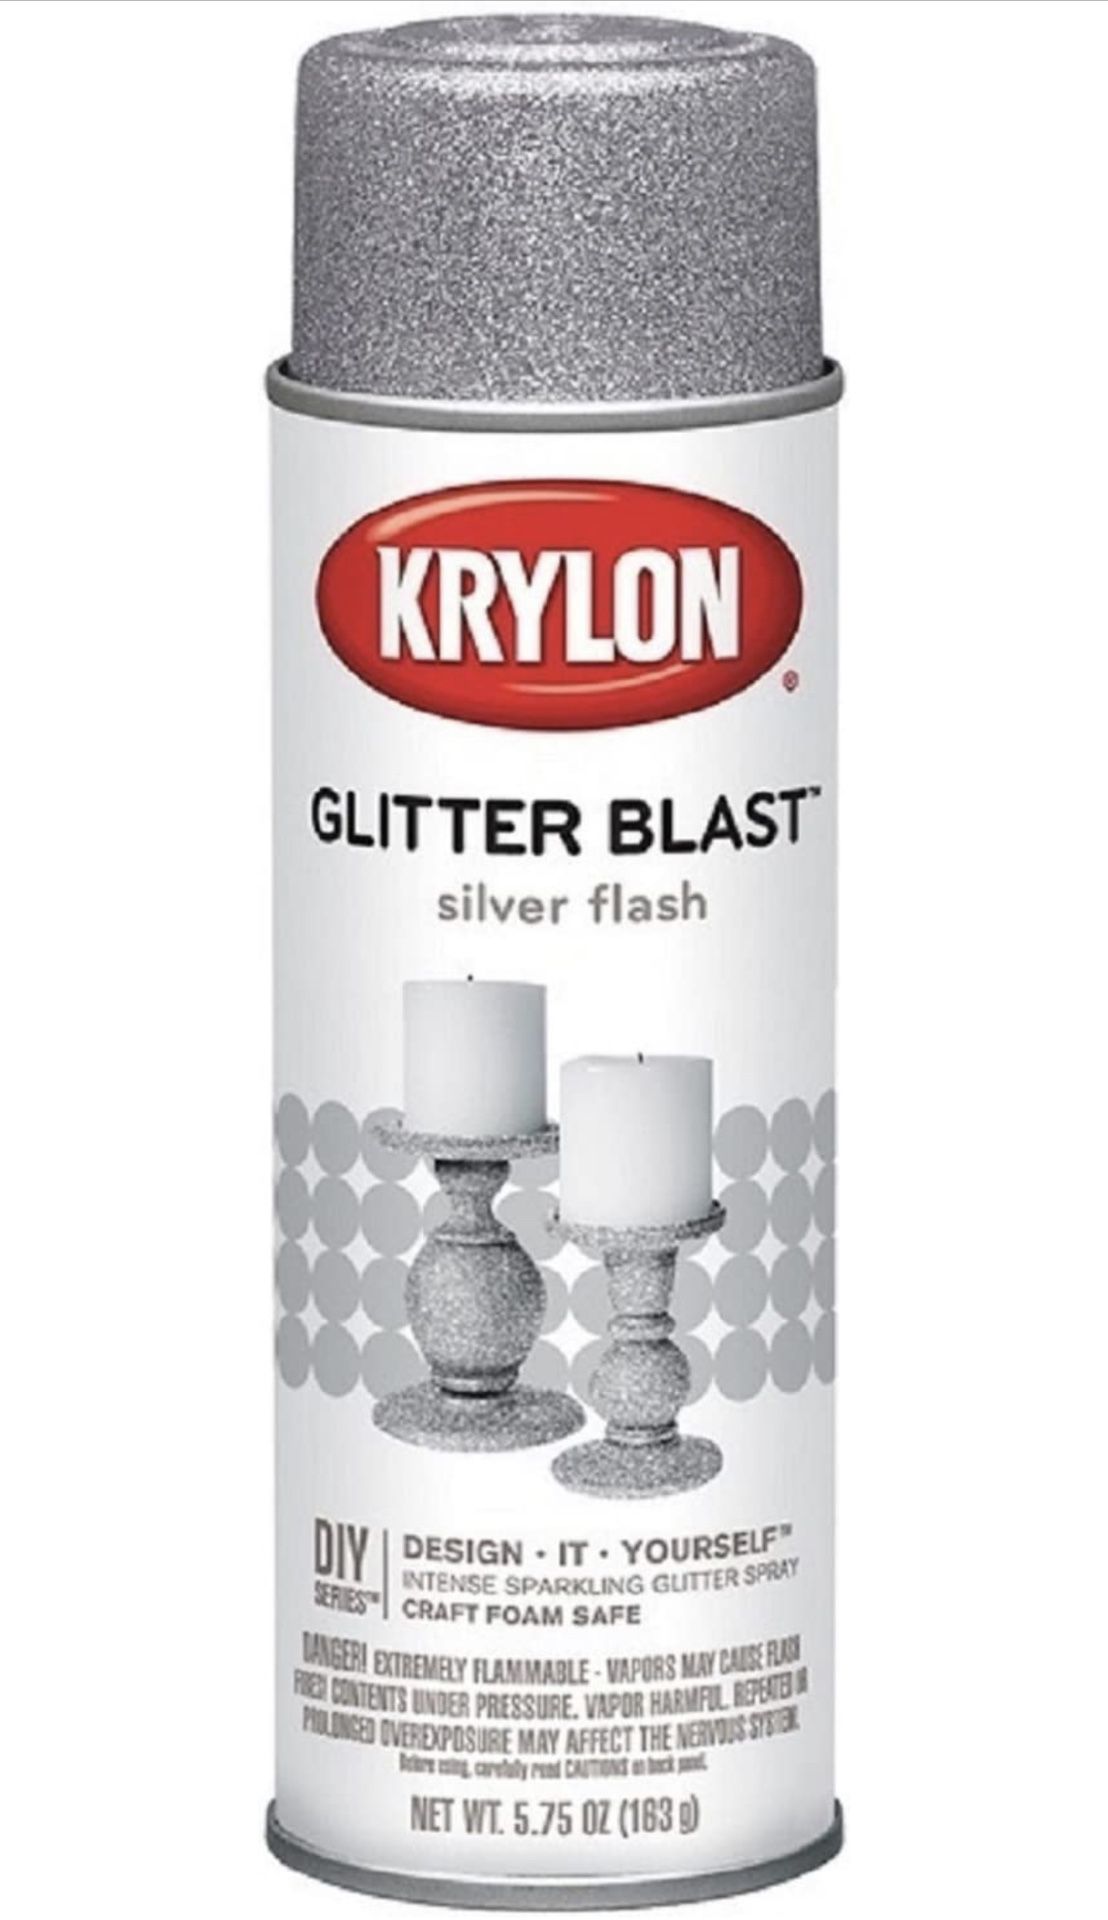 Glitter Blast Glitter Spray Paint for Craft Projects, Silver Flash, 5.75 oz